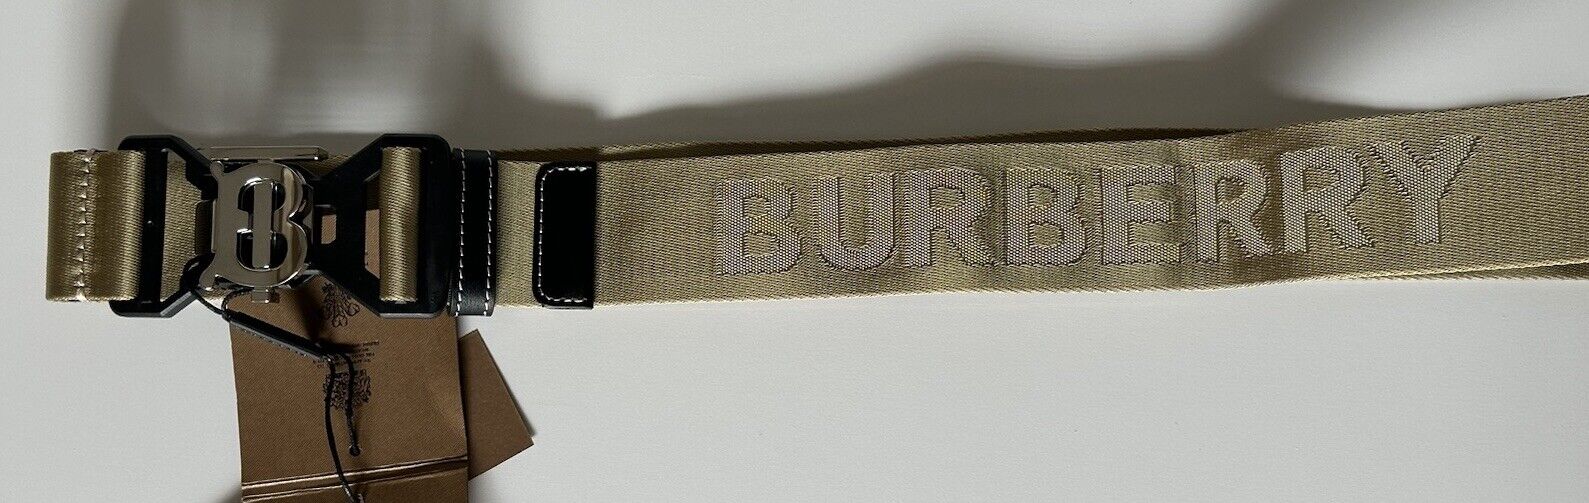 Burberry Sport Clip TB Buckle Nylon Honey Belt 30/75 Italy 8051511 New $440